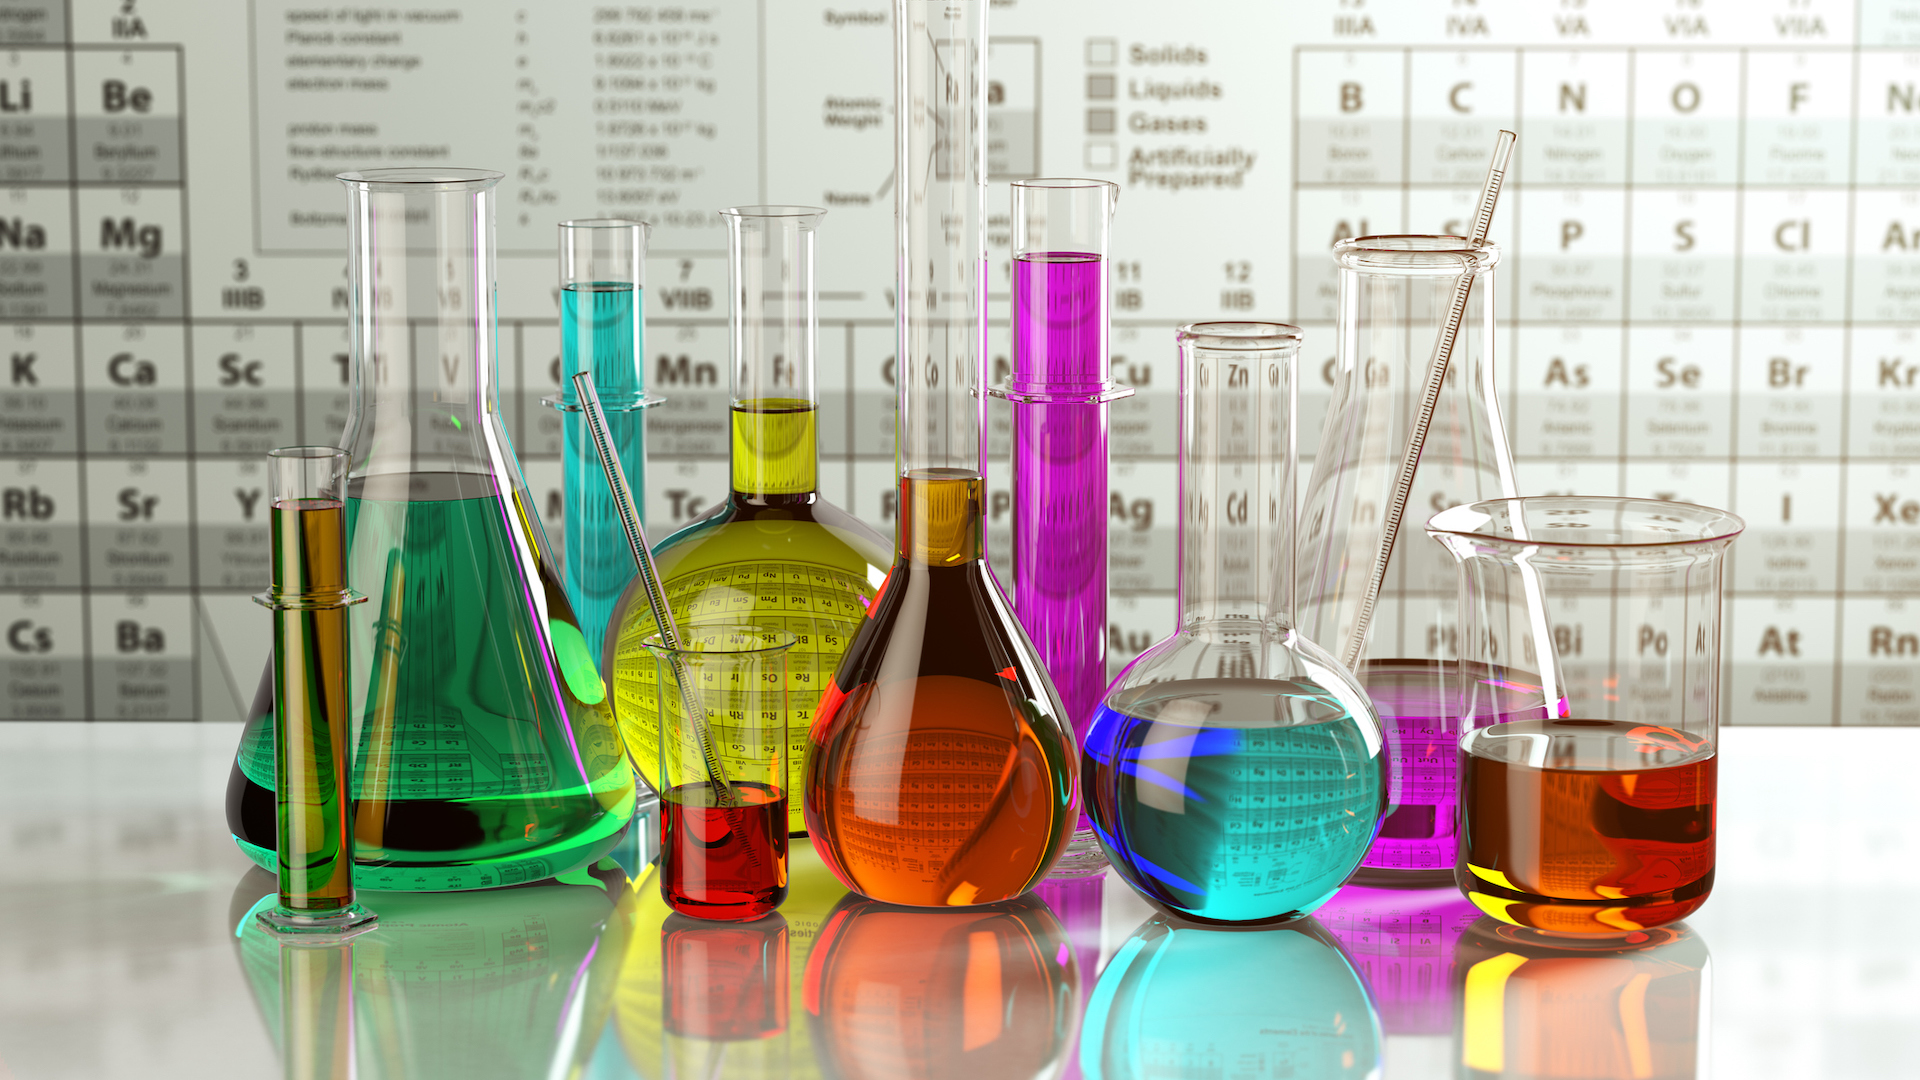 A selection of chemistry flasks